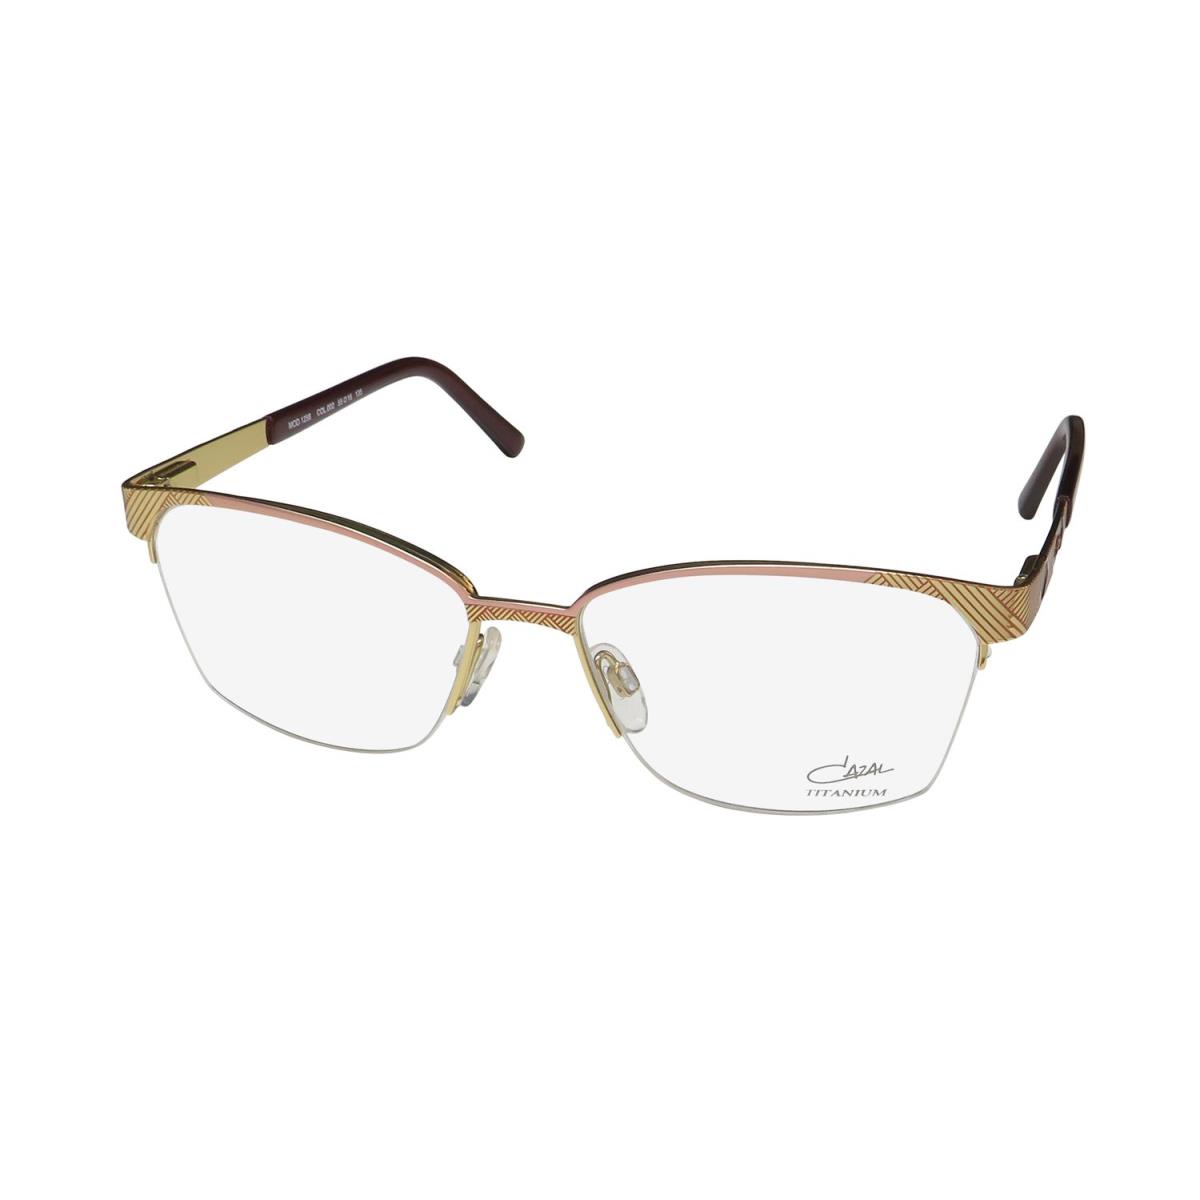 Cazal 1258 Titanium Semi-rimless Made IN Germany Designer Eyeglass Frame/glasses Gold / Burgundy